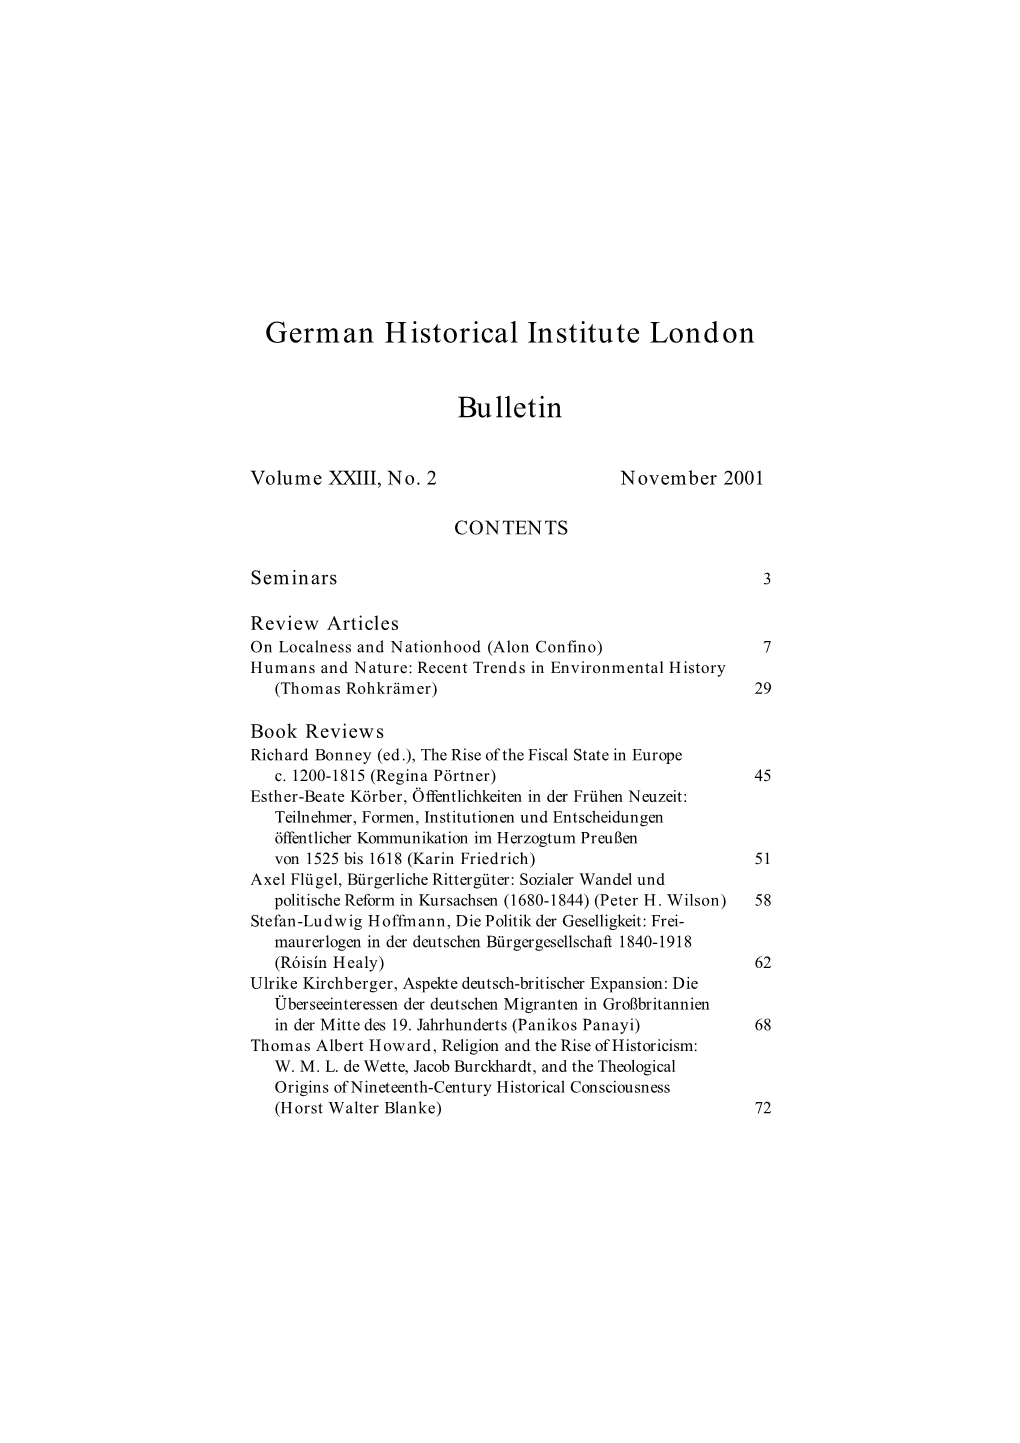 German Historical Institute London Bulletin Vol 23 (2001), No. 2